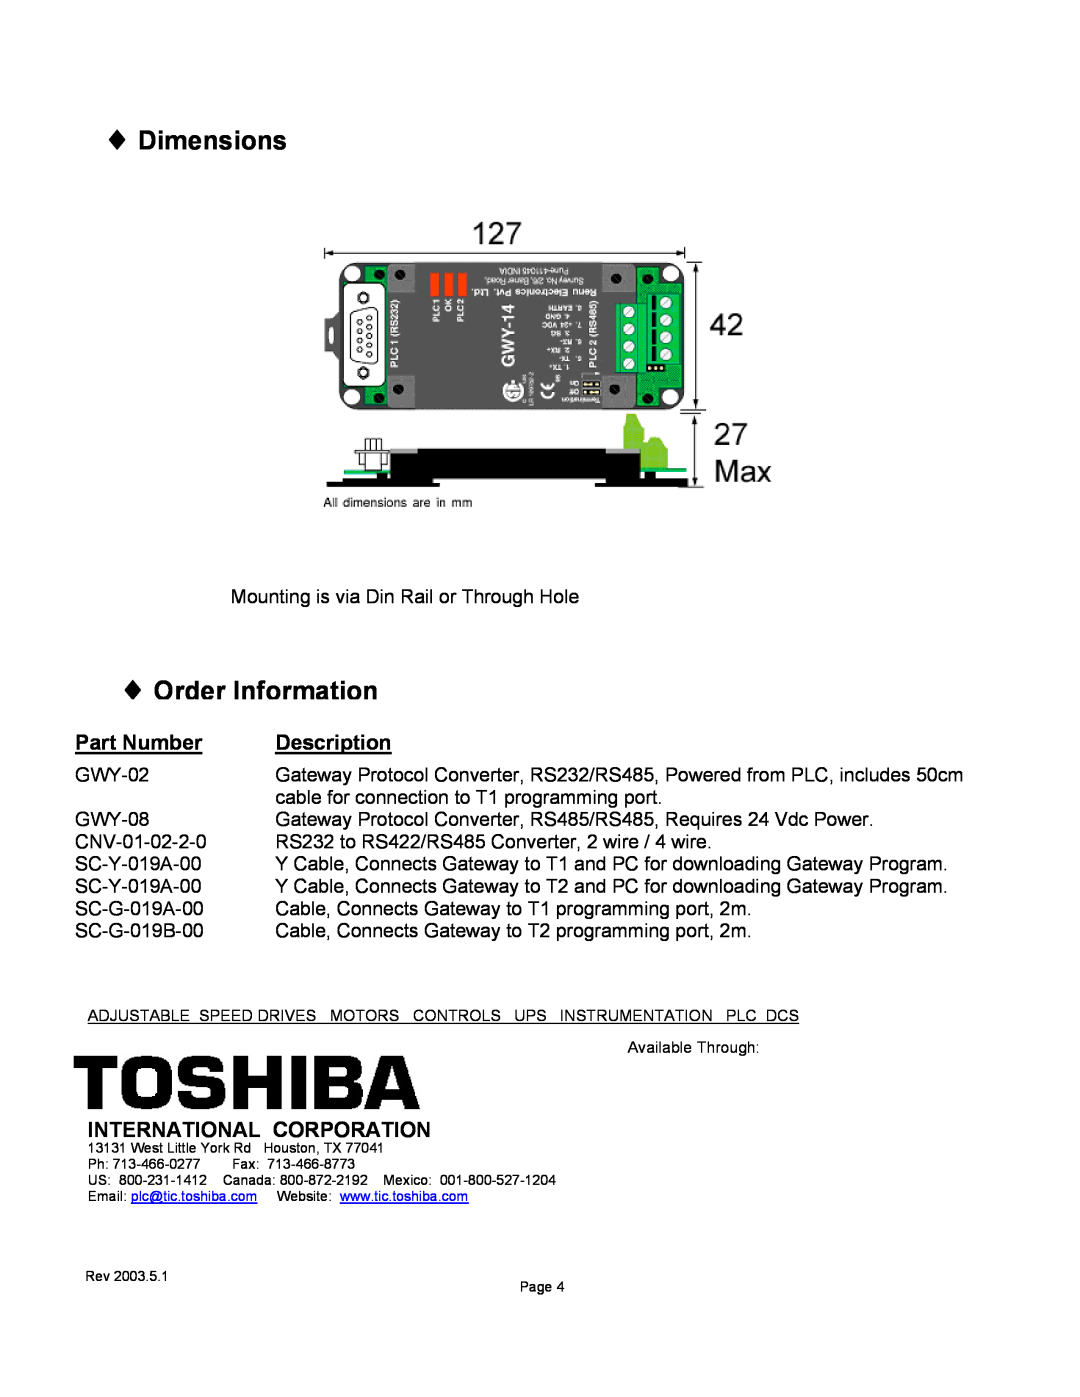 Toshiba T1-40 PLC manual Dimensions, Order Information, Part Number, Description, International Corporation 